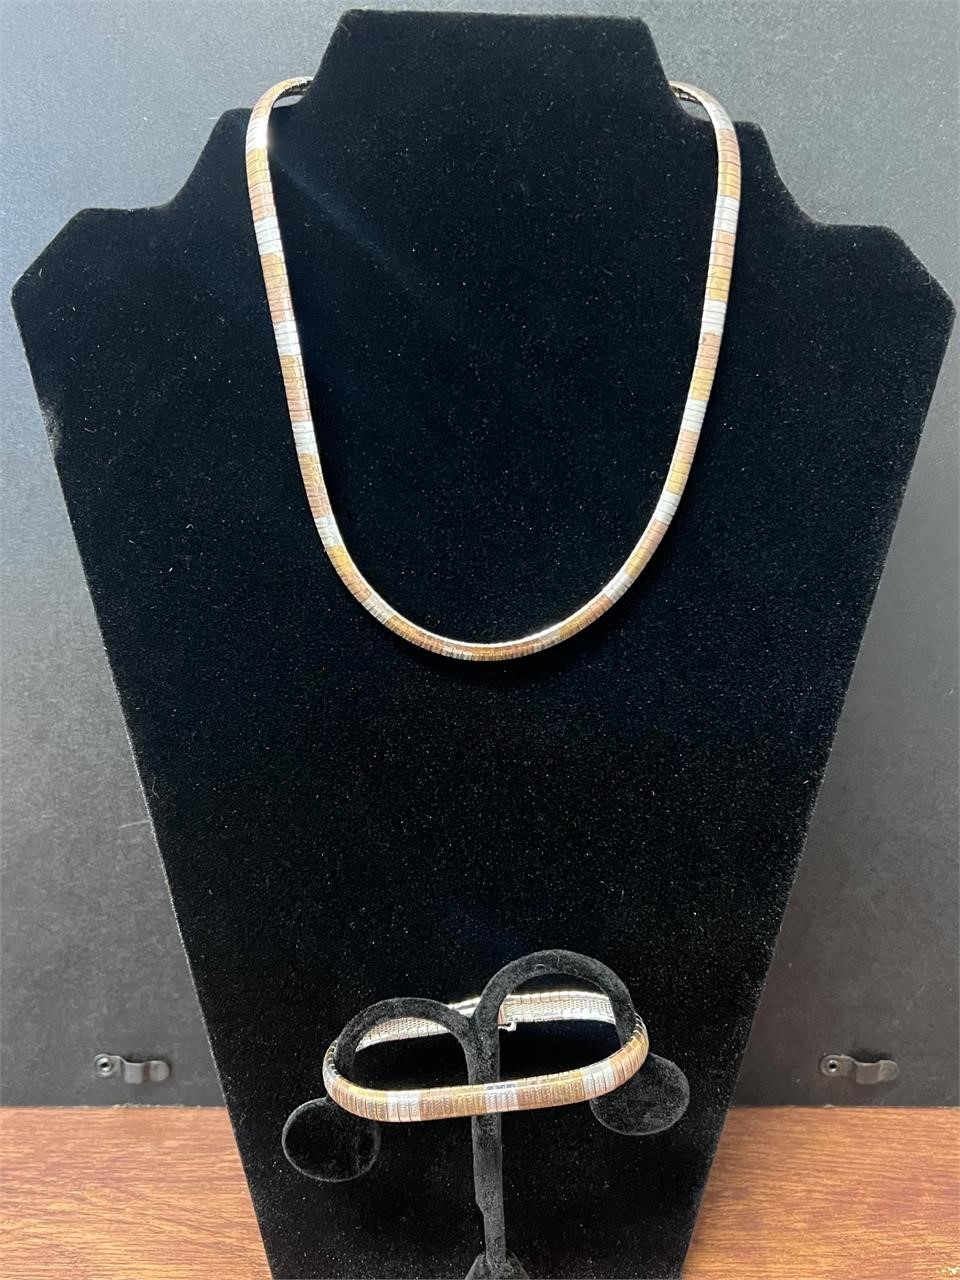 VTG Sterling Silver matching bracelet and necklace